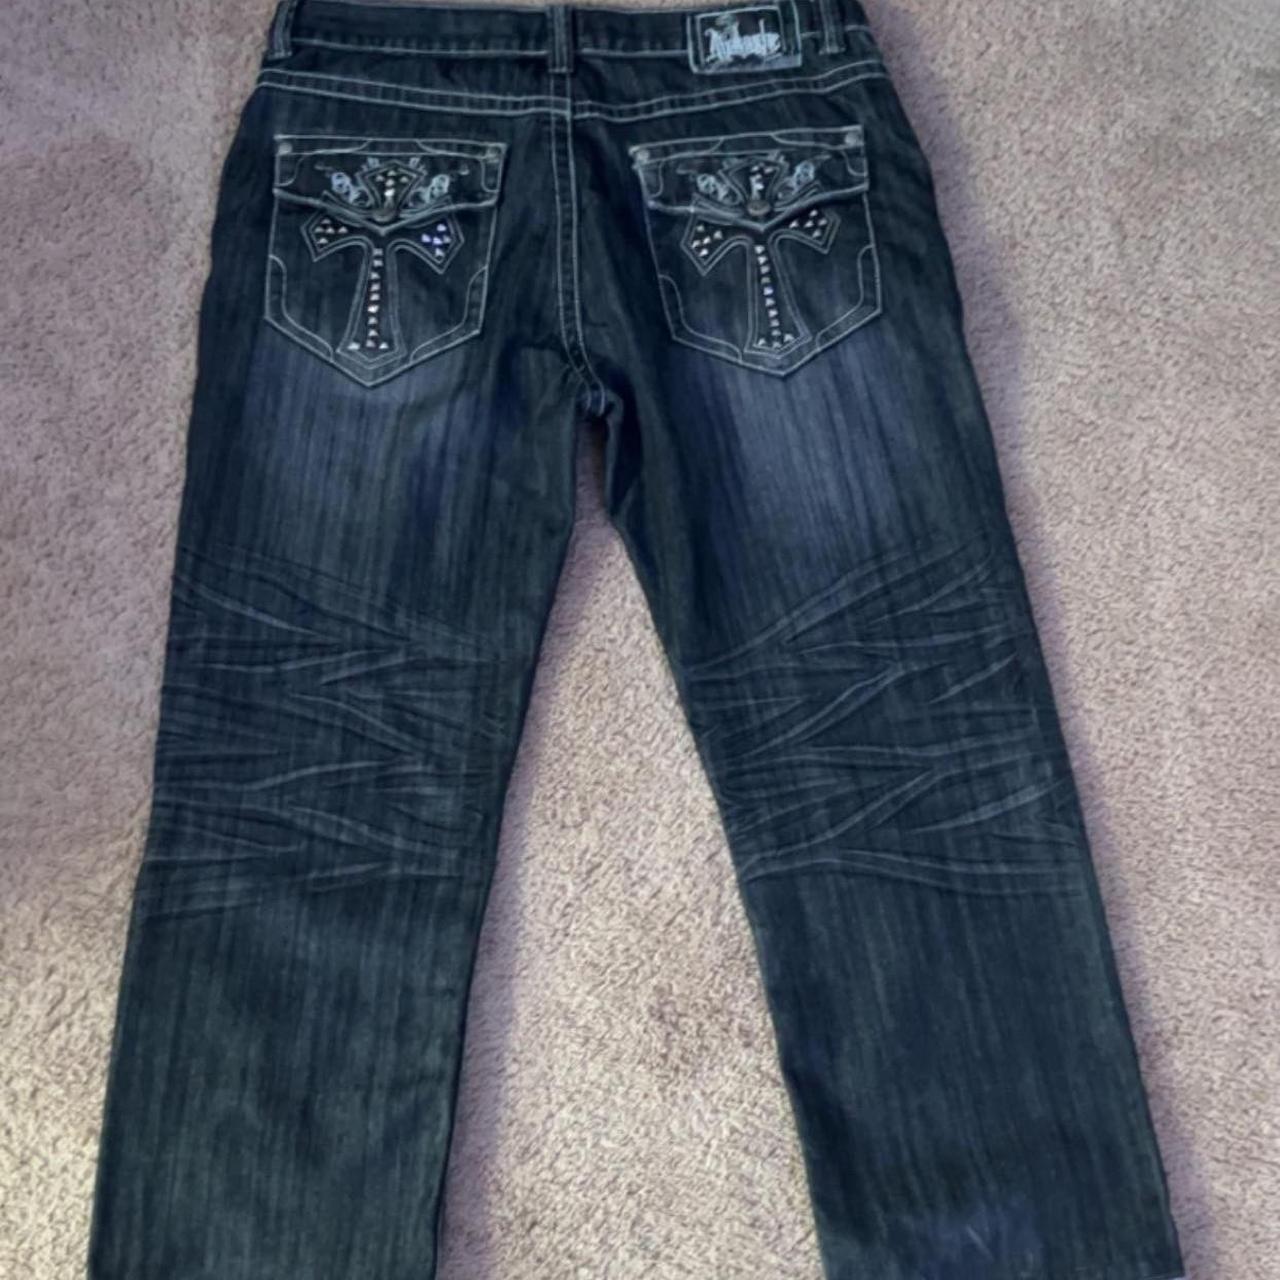 Black y2k ablanche cross affliction jeans - Depop